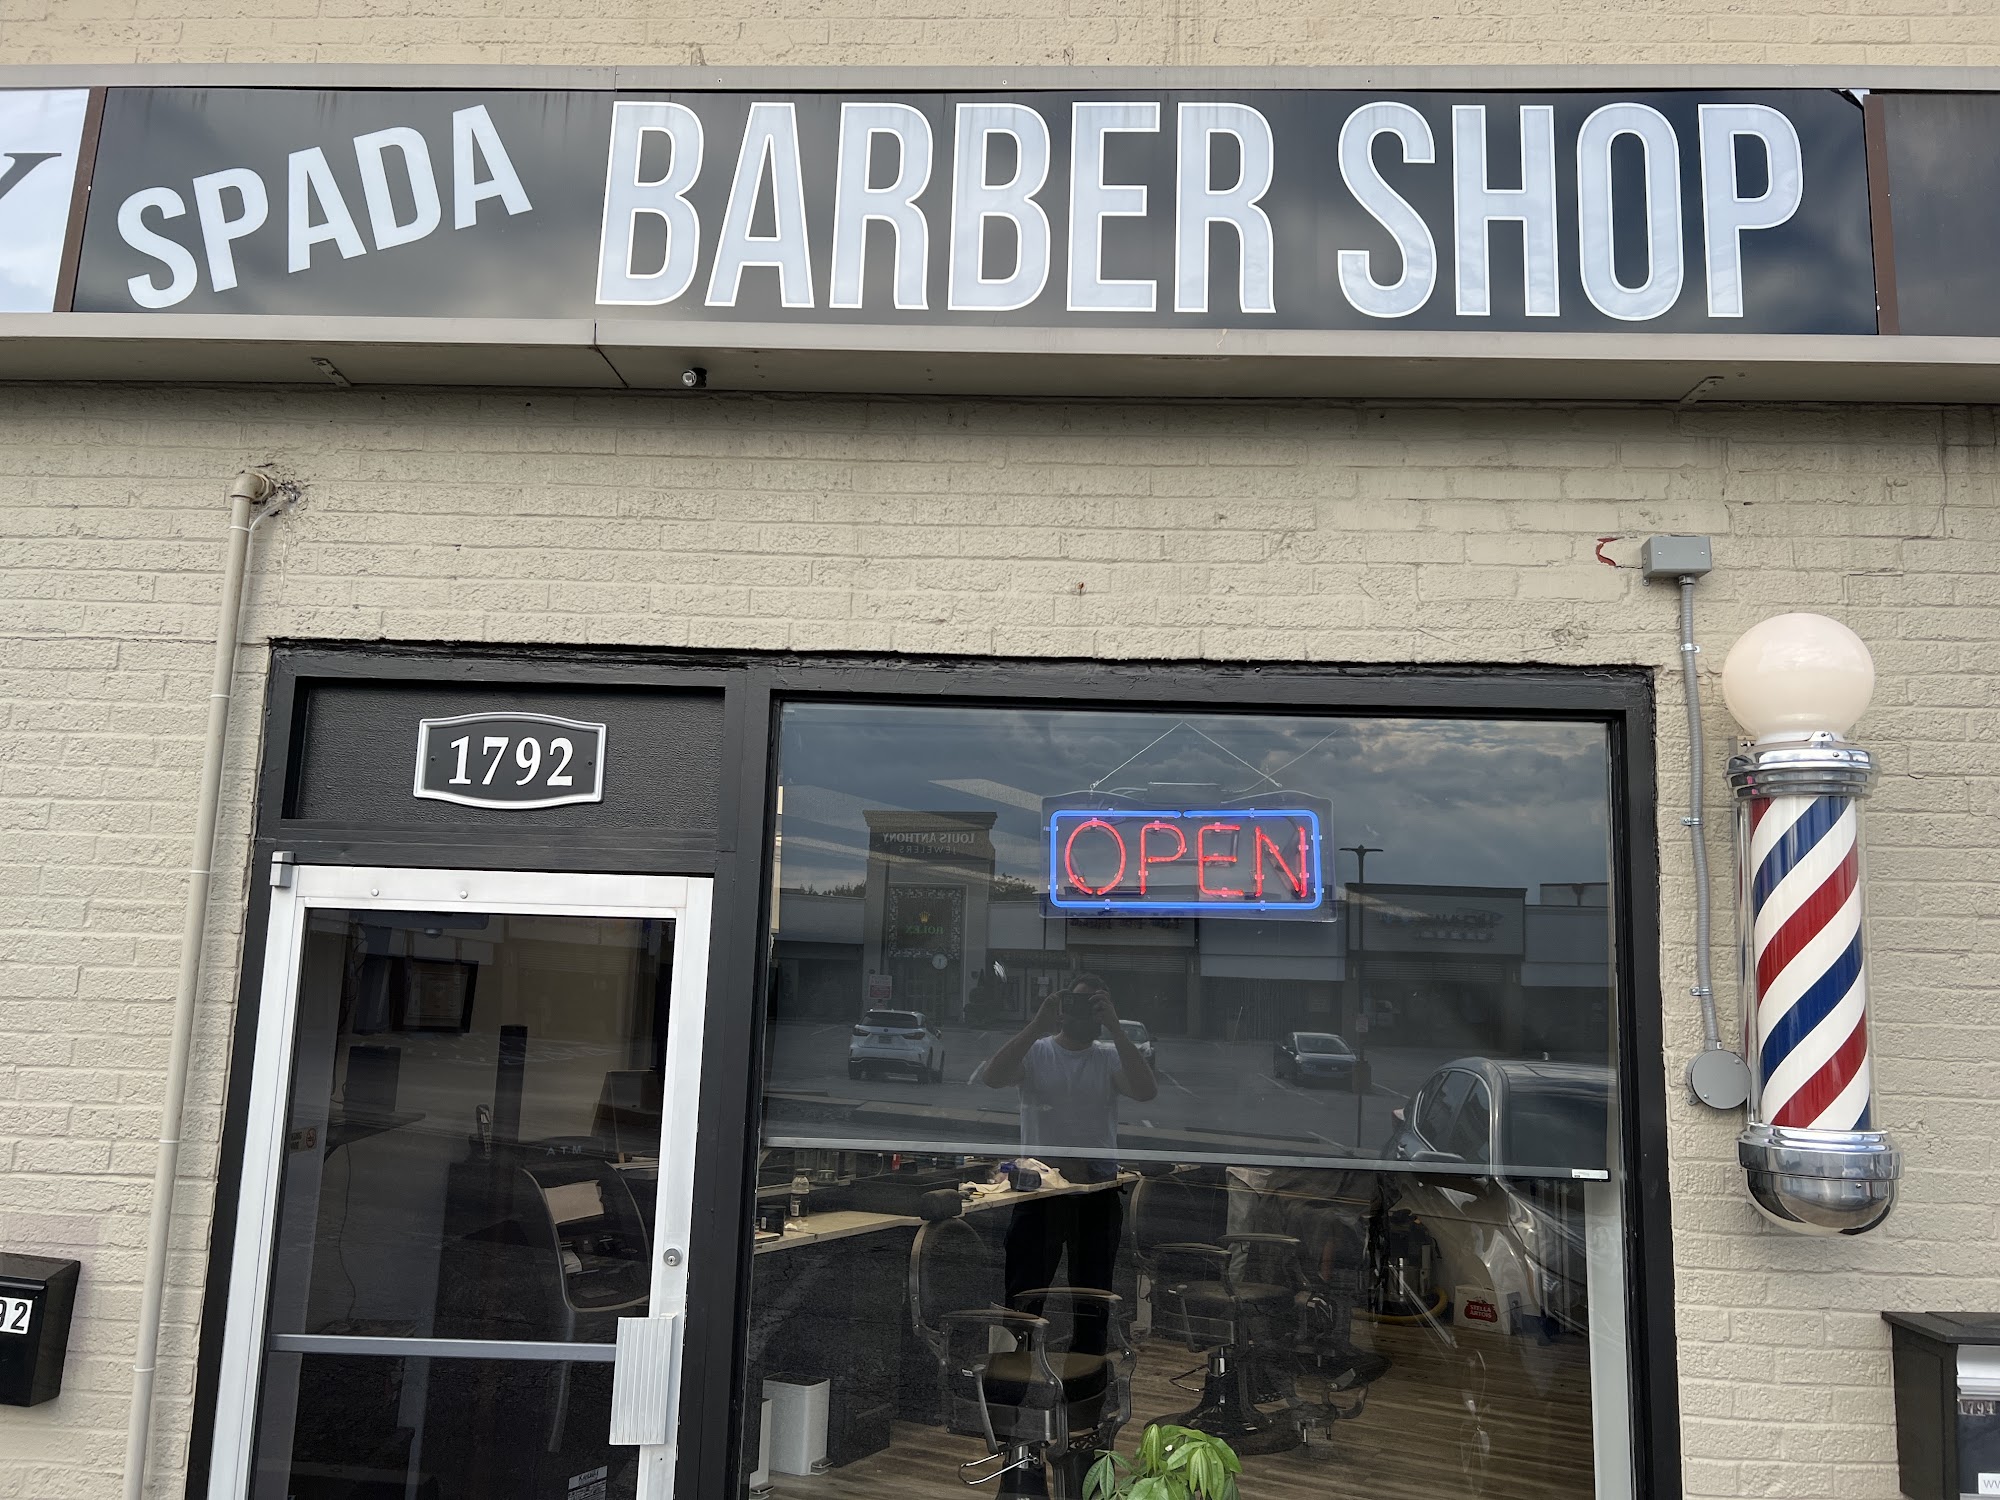 Spada Barber Shop